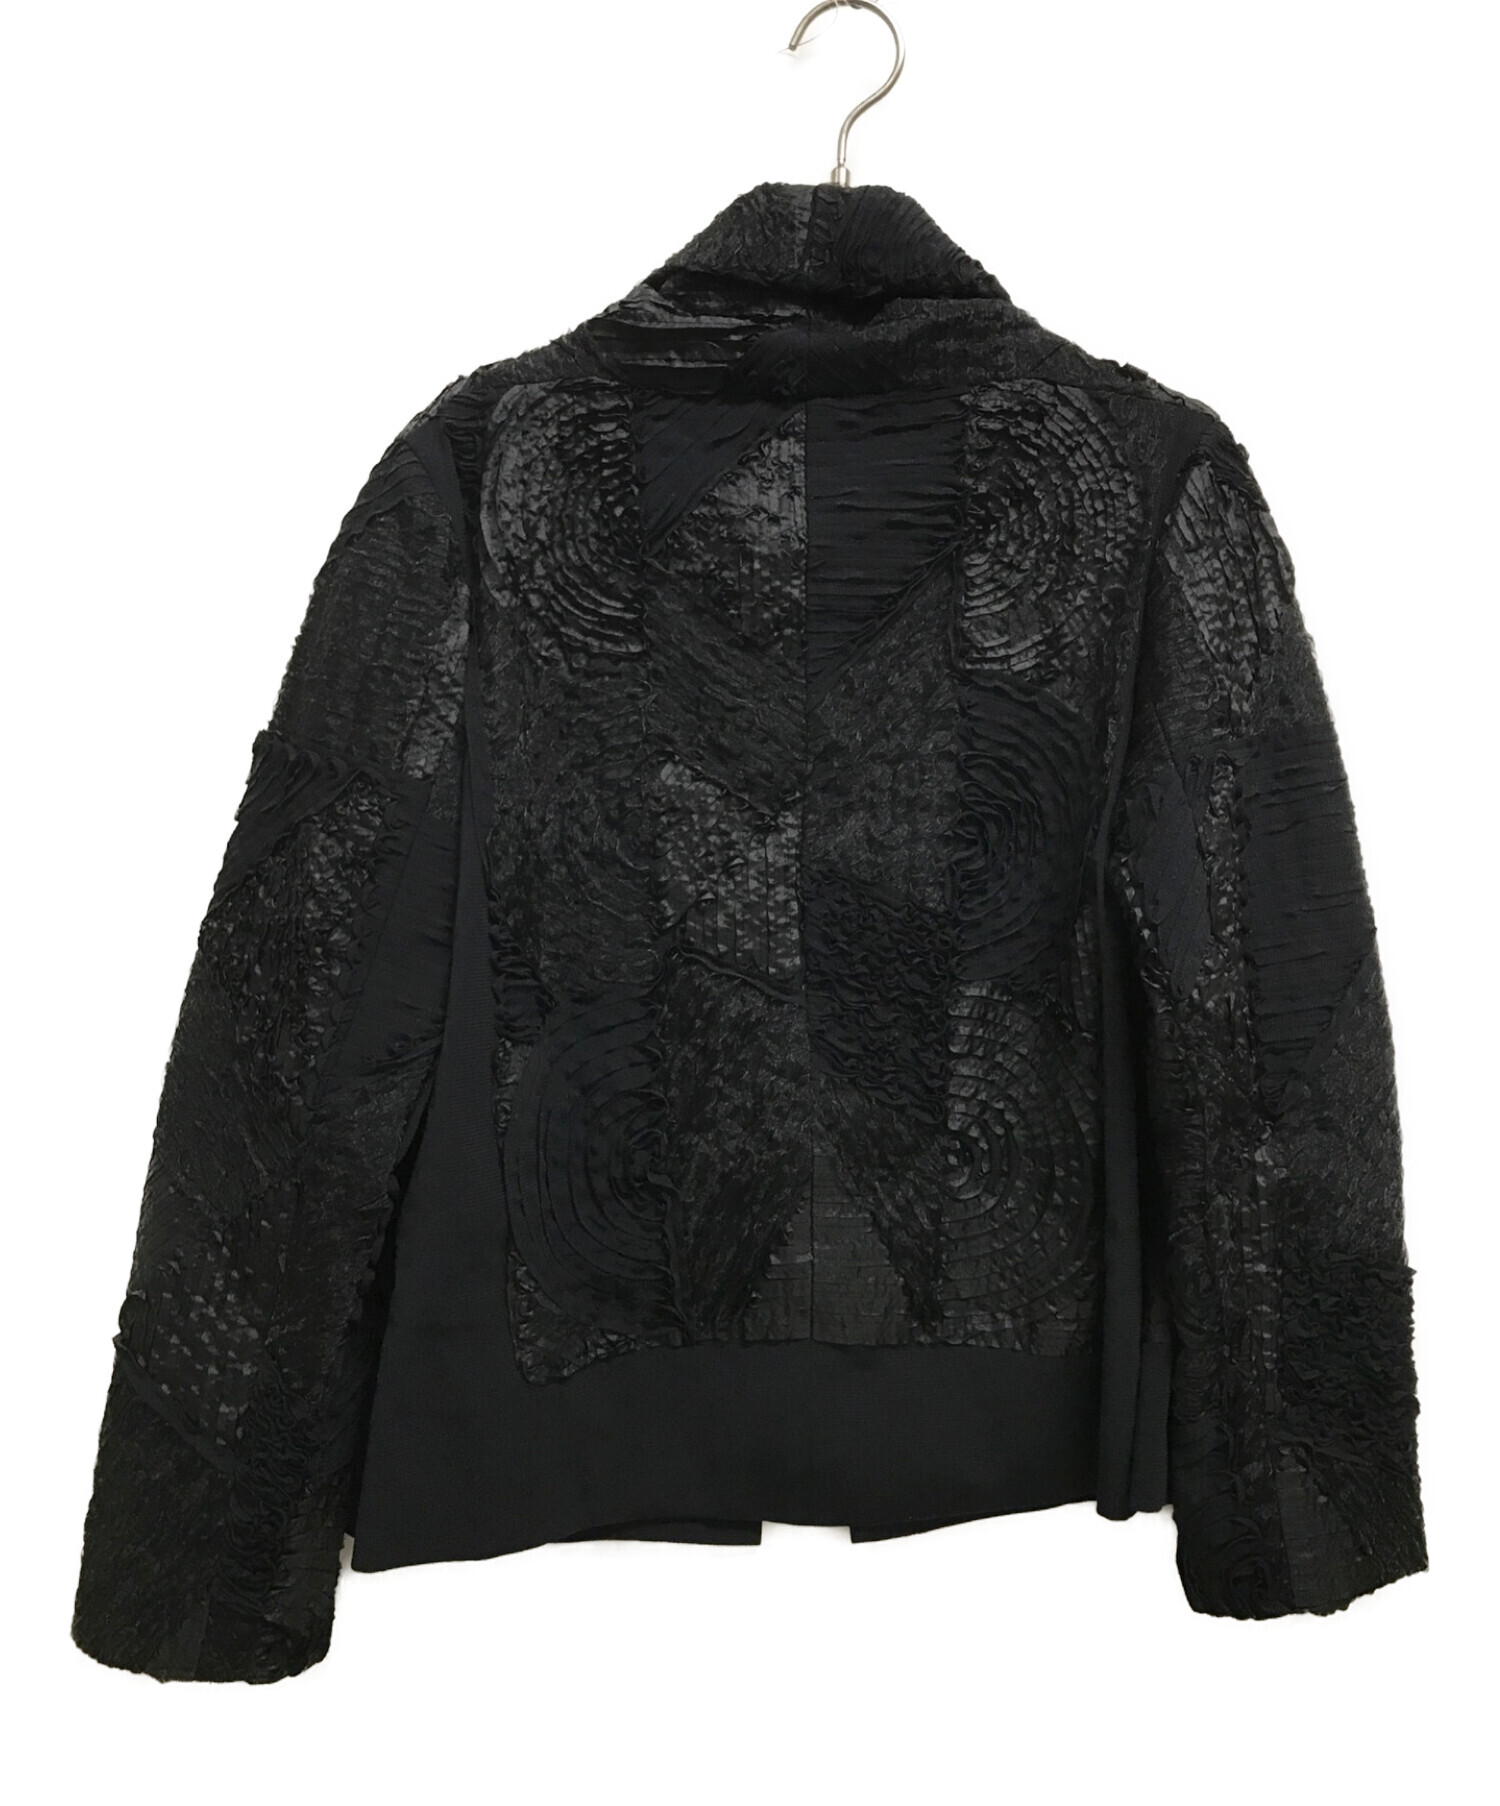 HaaT ISSEY MIYAKE (ハート イッセイ ミヤケ) パターン切替デザインジャケット ブラック サイズ:2